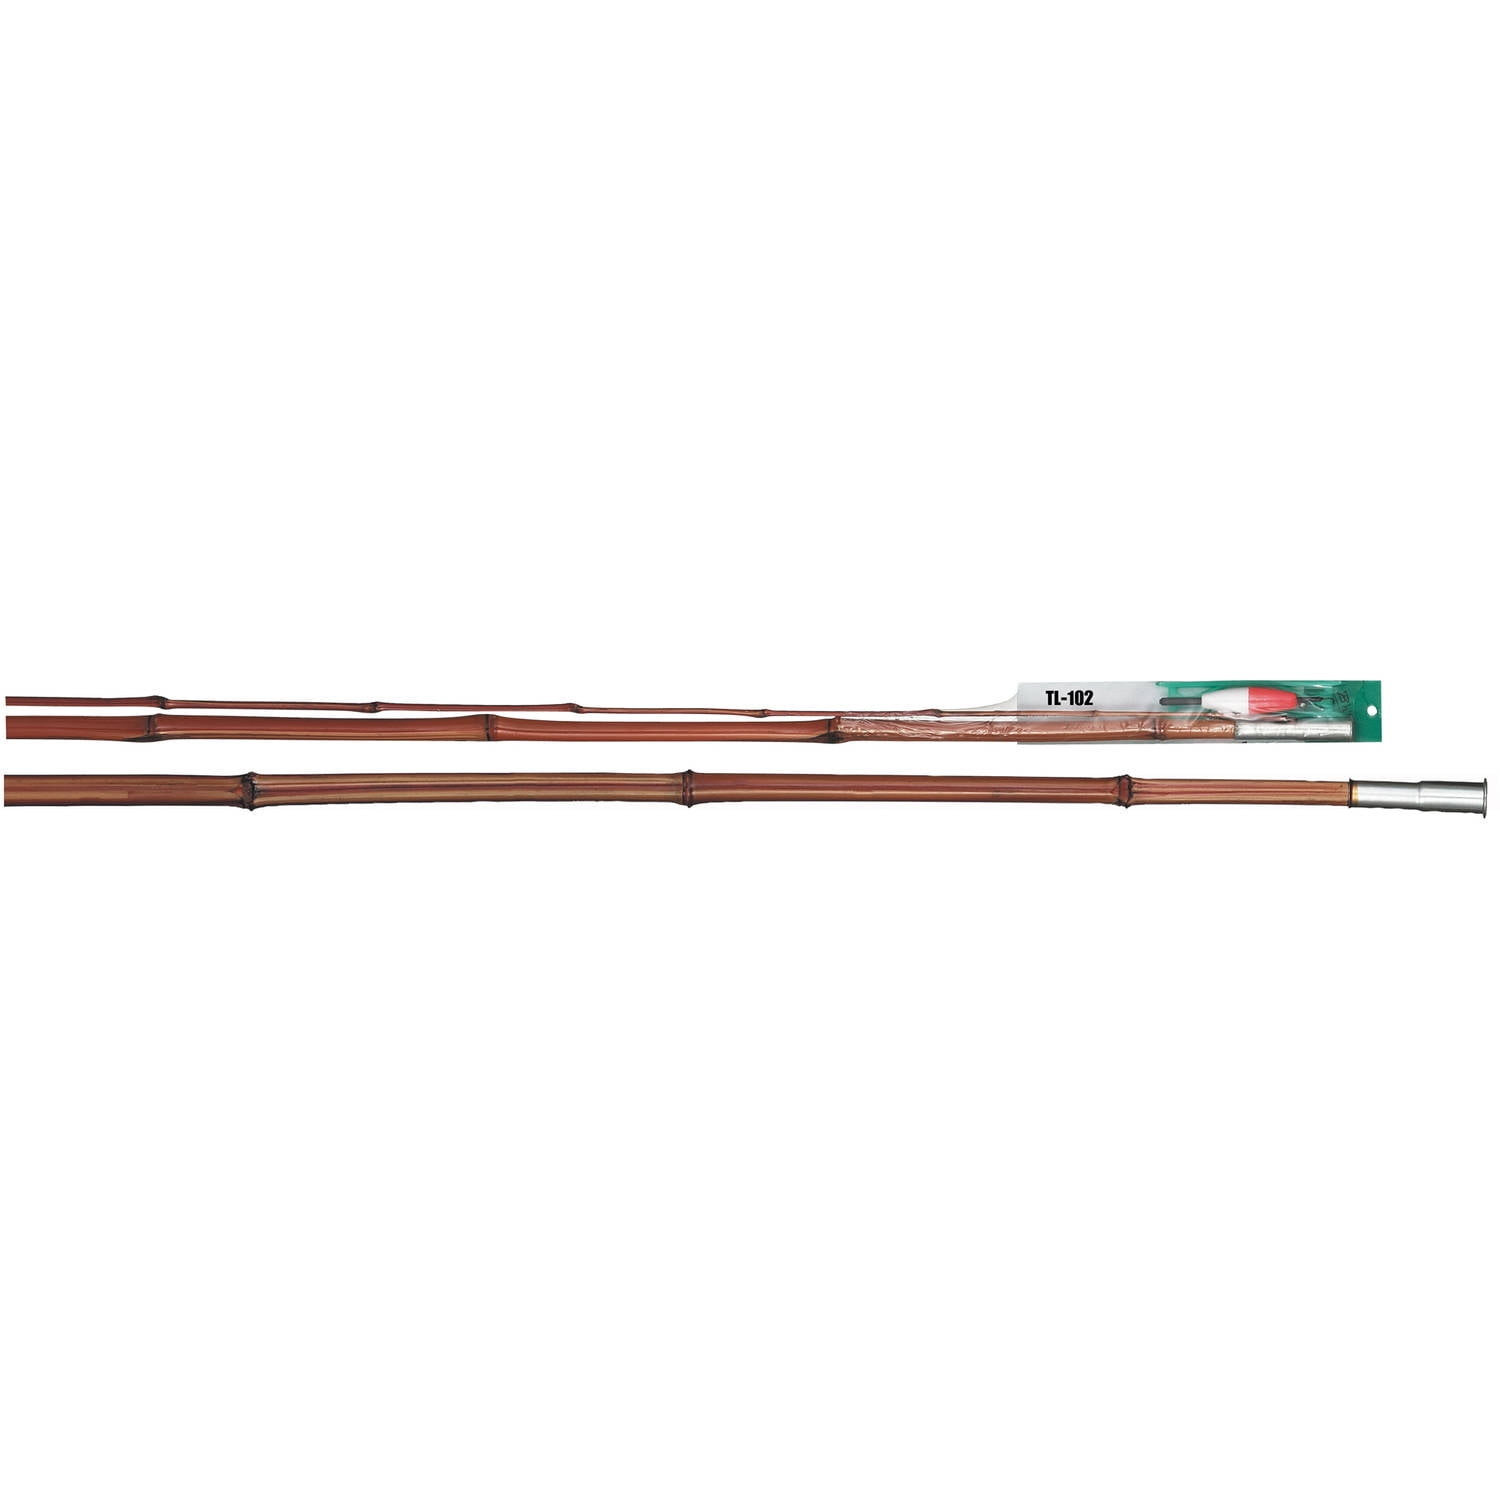 B'n'M Pole Company 10' Jointed Bamboo Fishing Rod 